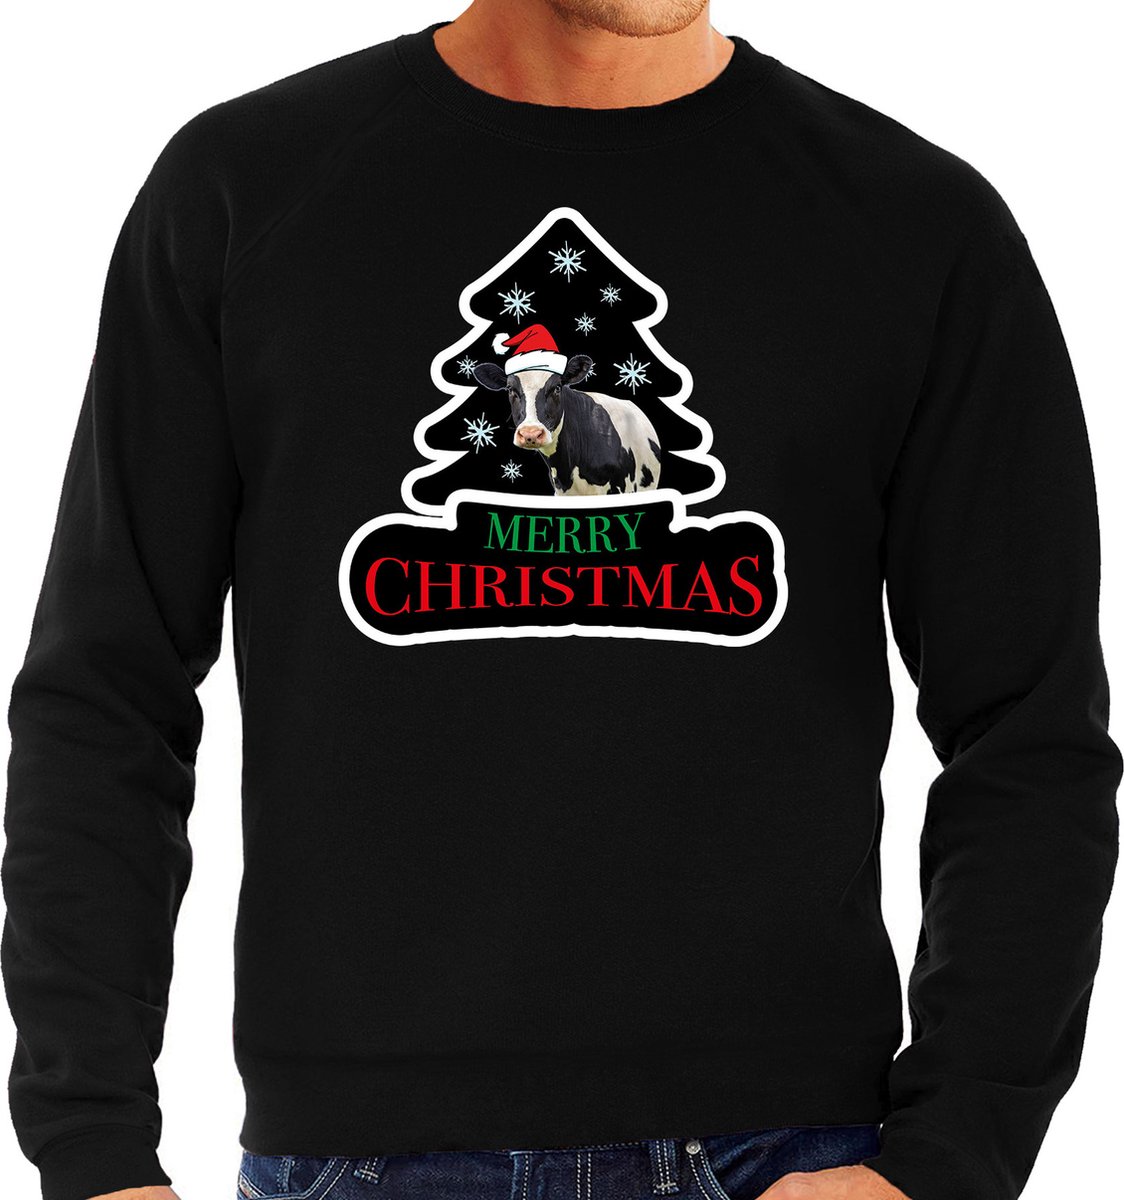 Dieren kersttrui koe zwart heren - Foute koeien kerstsweater - Kerst outfit dieren liefhebber L